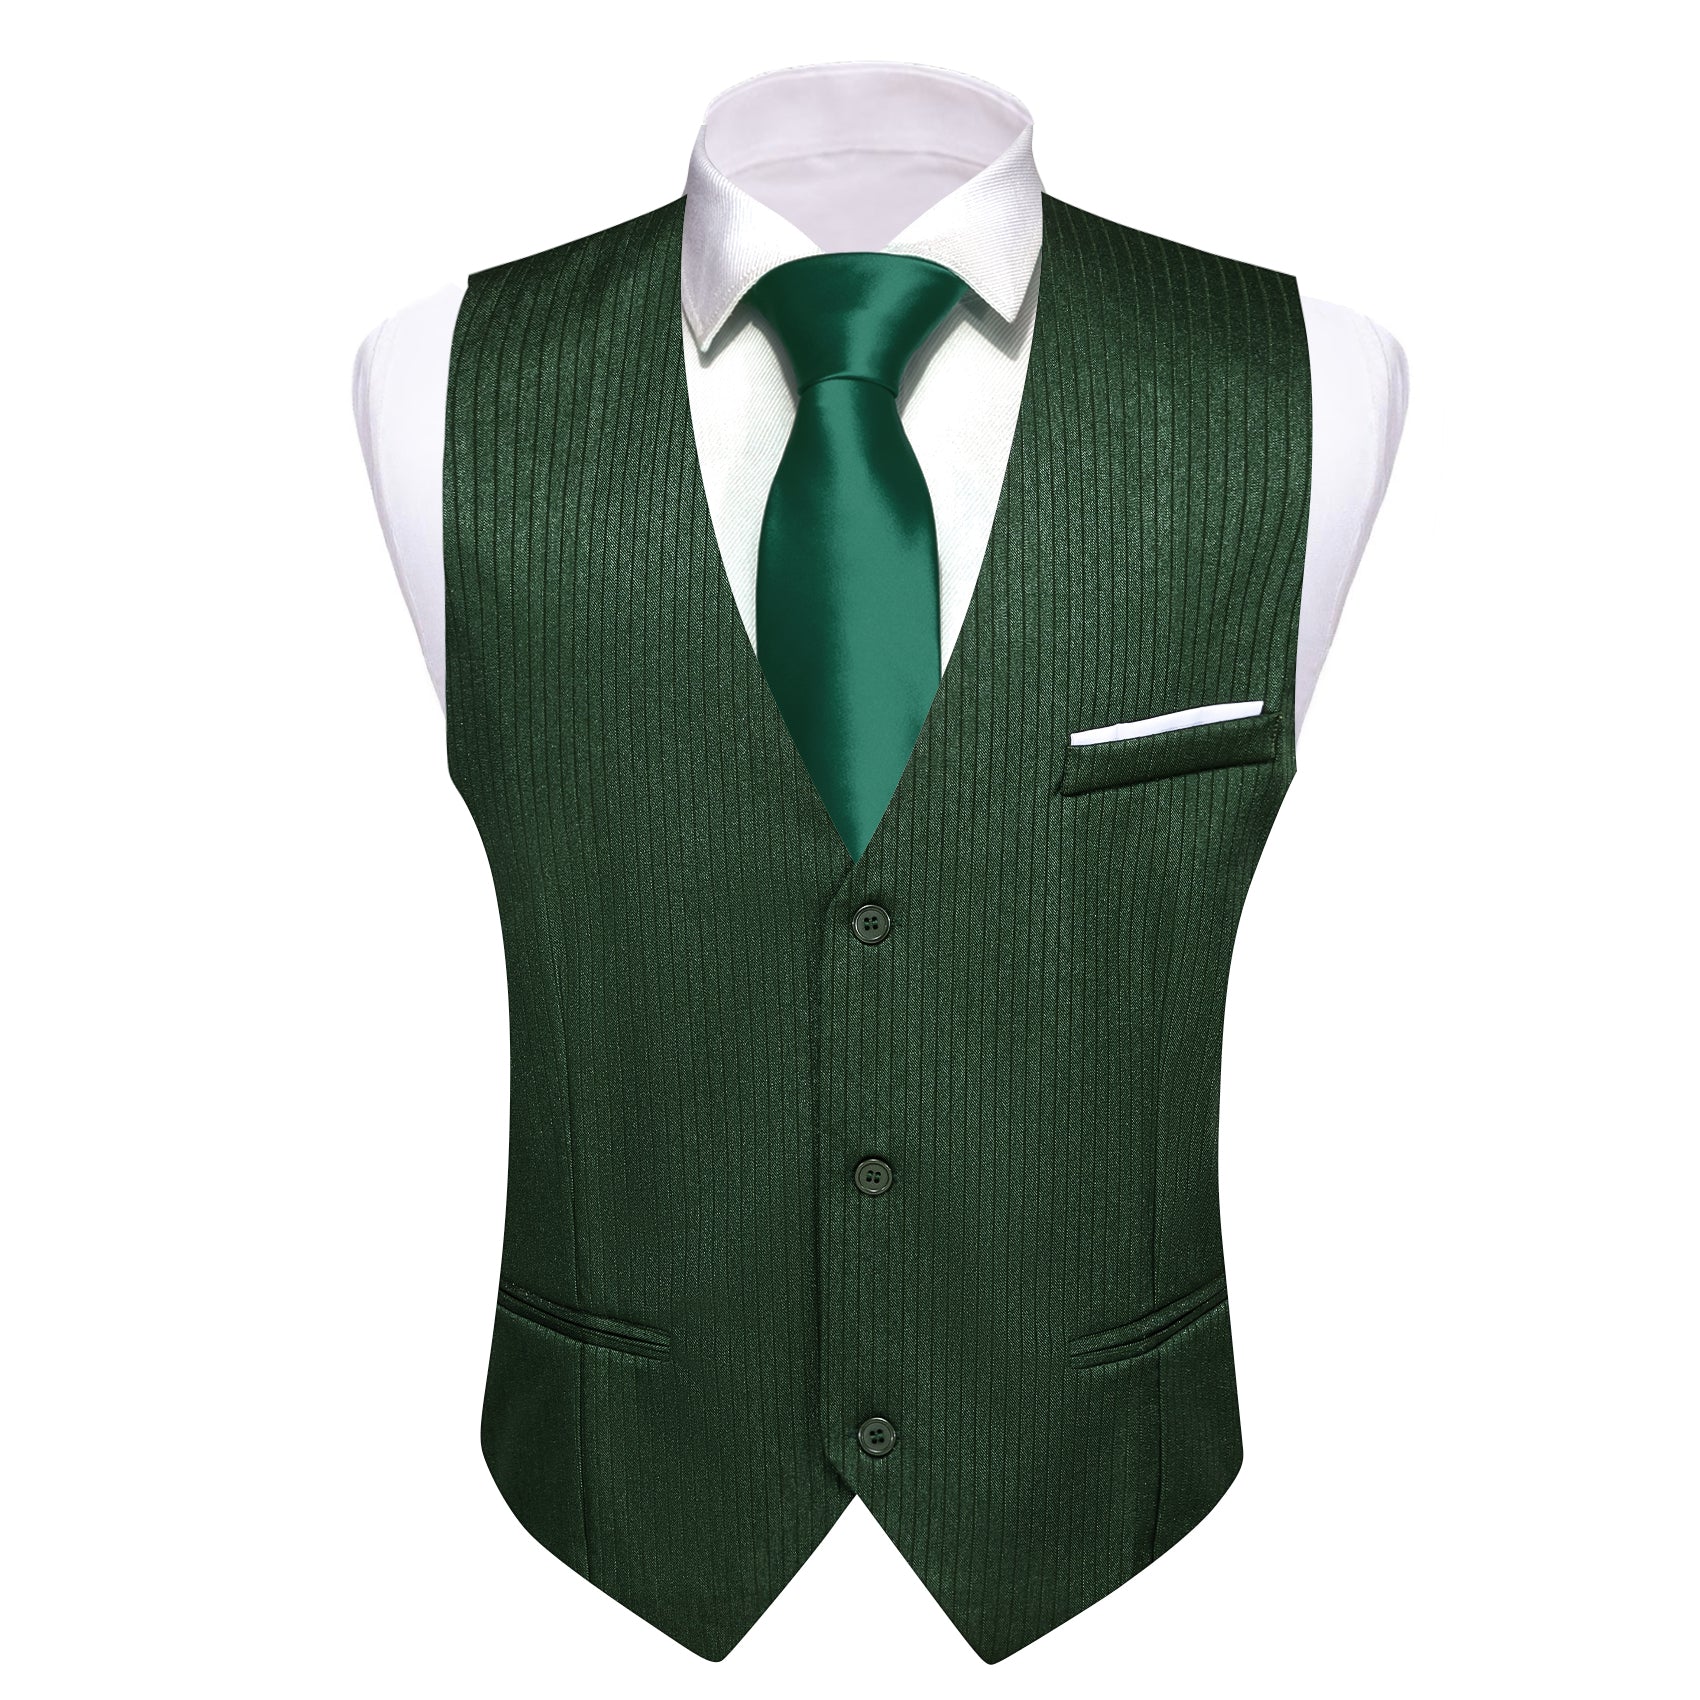 Barry.wang Men's Vest Formal Dark Green Solid Business Vest Suit